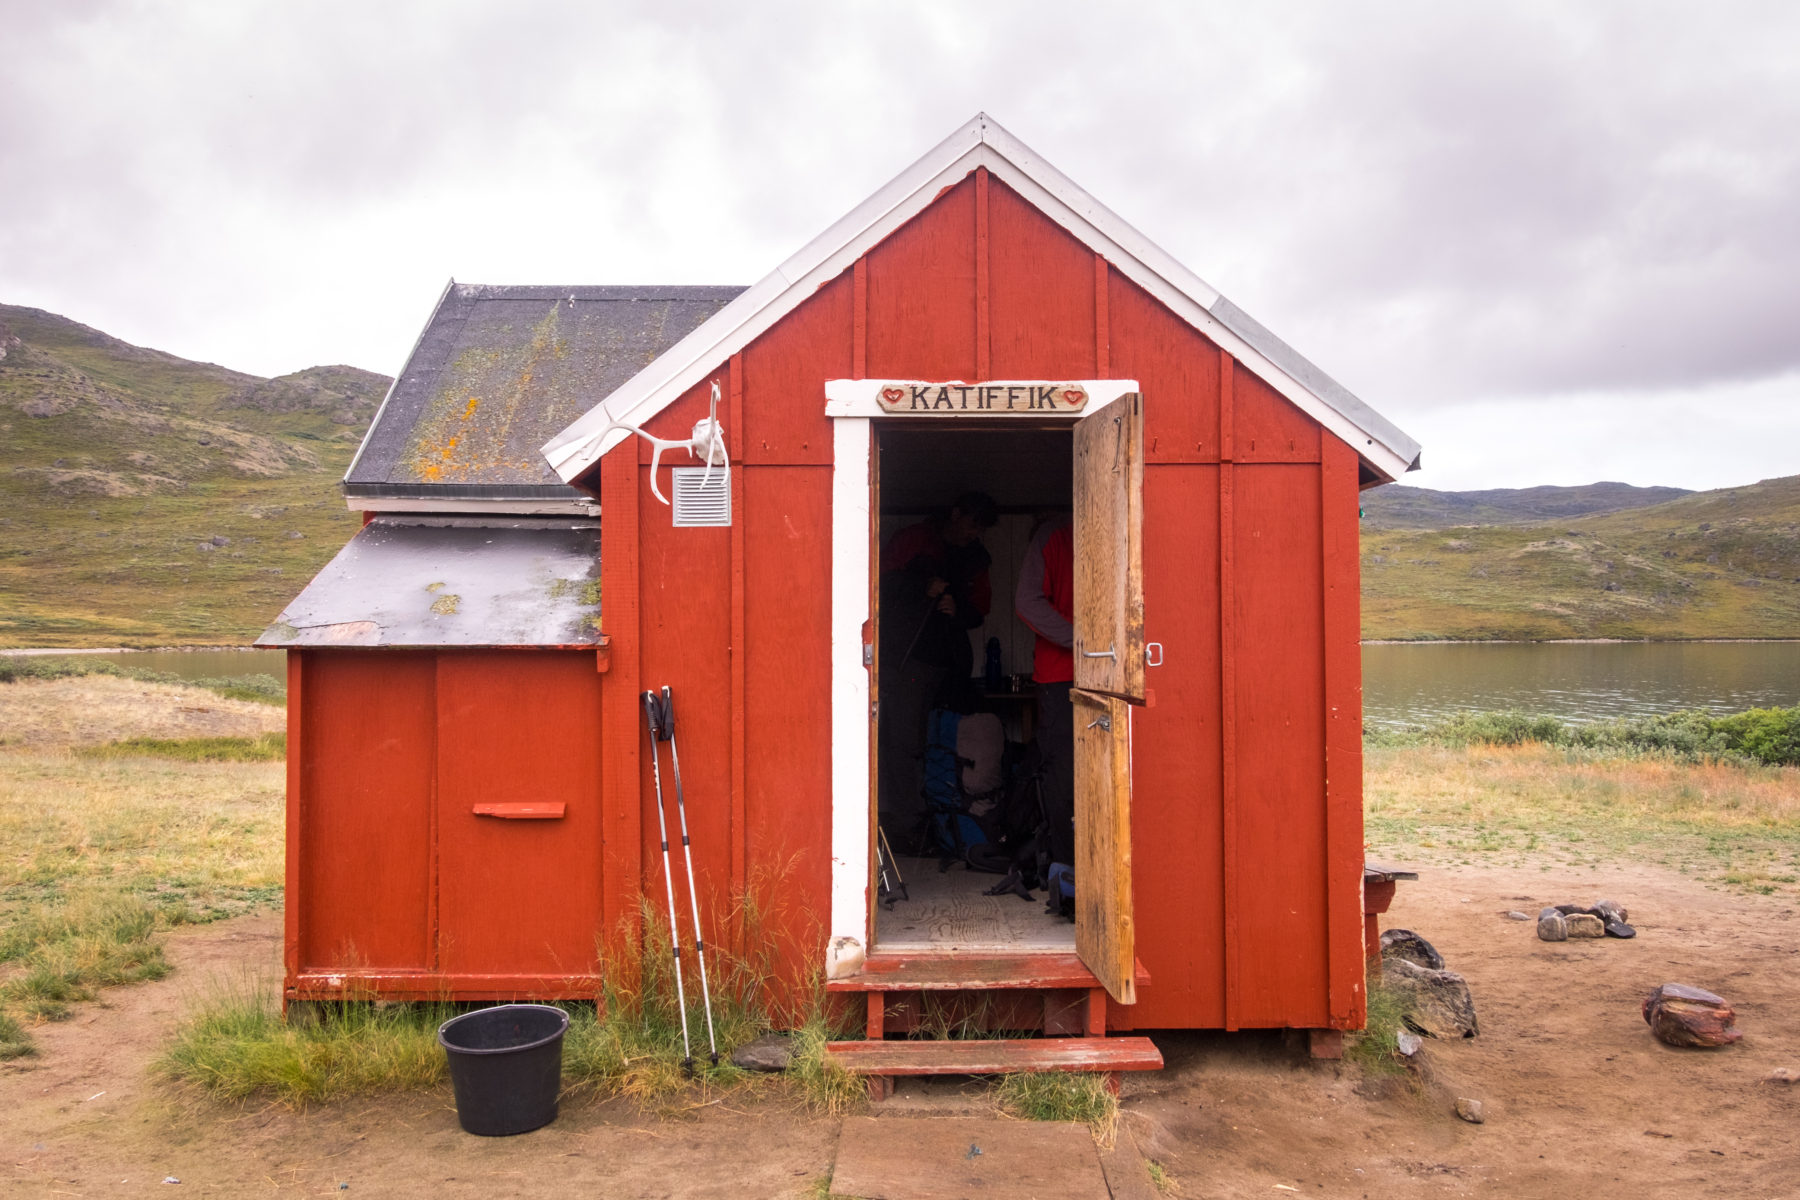 Kattifik hut on the Arctic Circle Trail